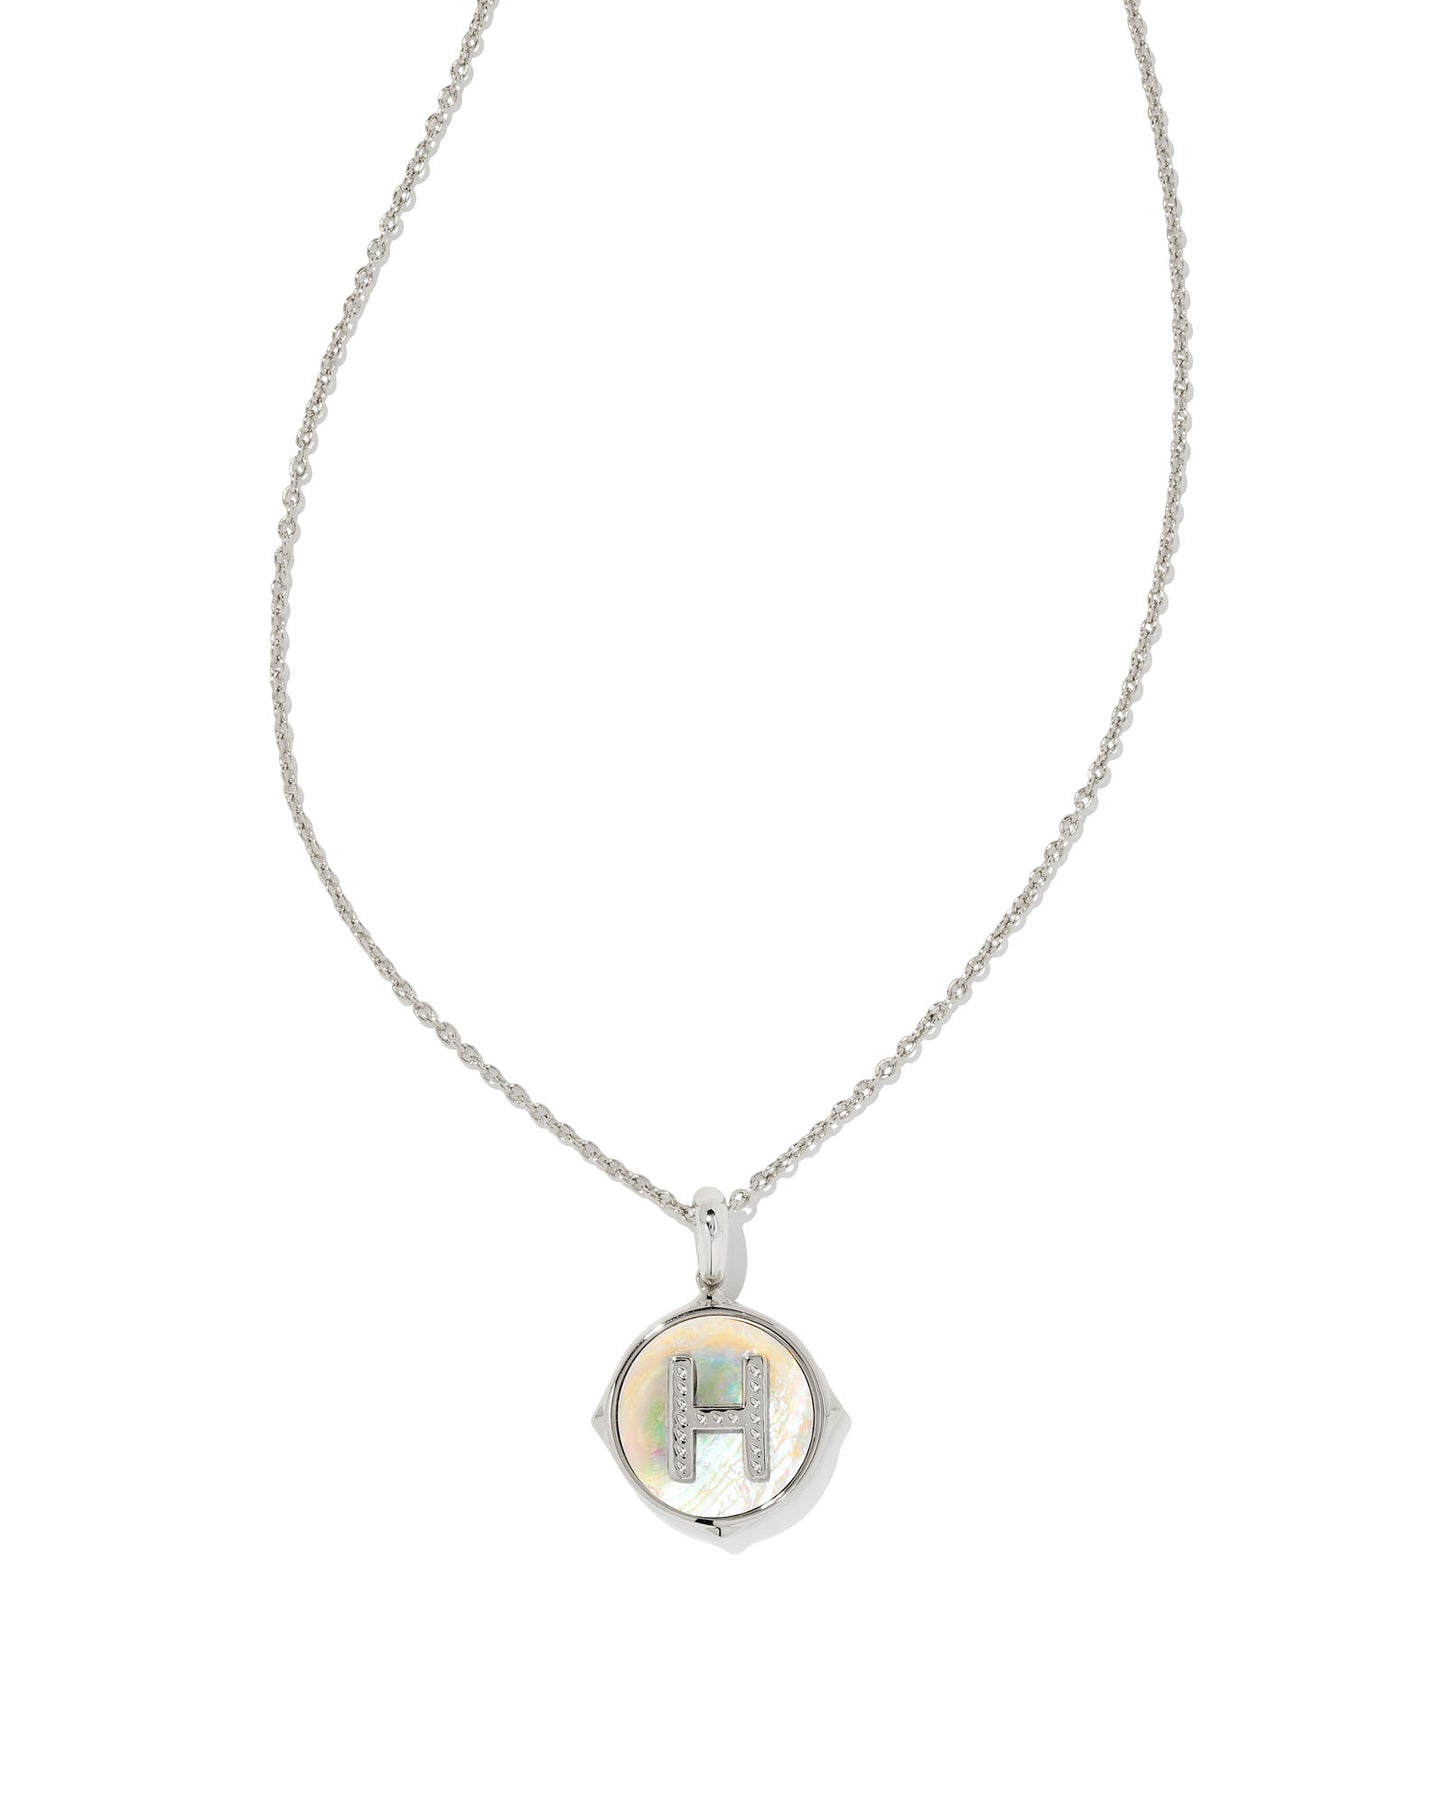 KENDRA SCOTT: Letter Disc Pendant Necklace in Rhodium/Iridescent Abalone